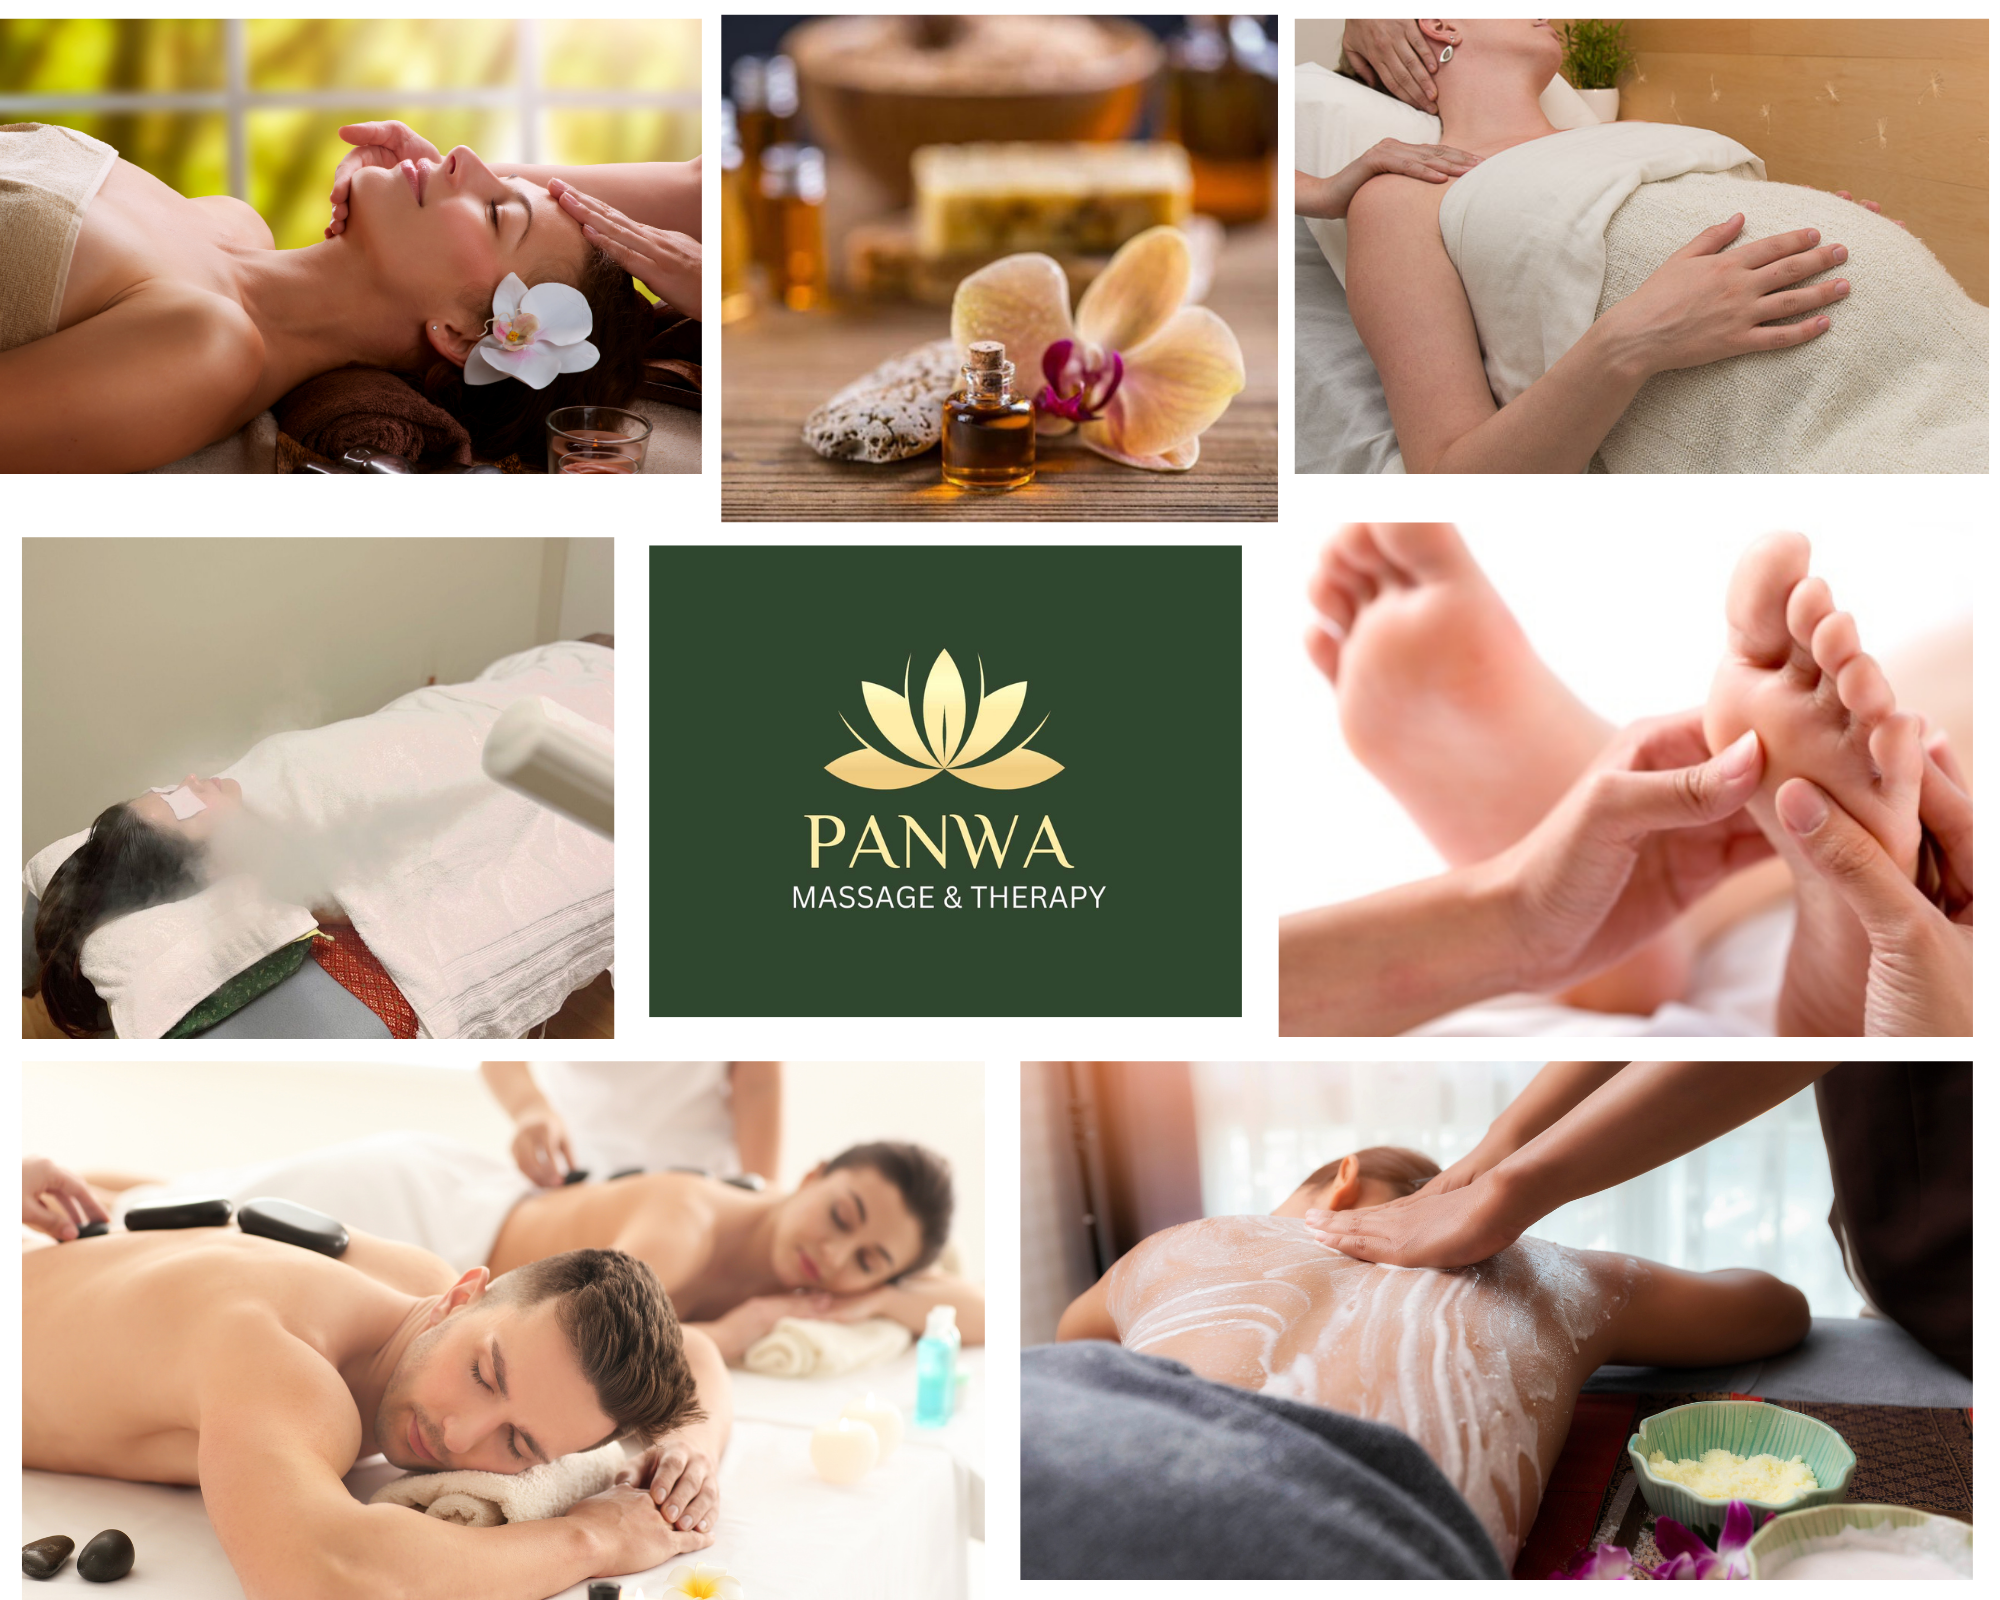 All Thai Massage Services